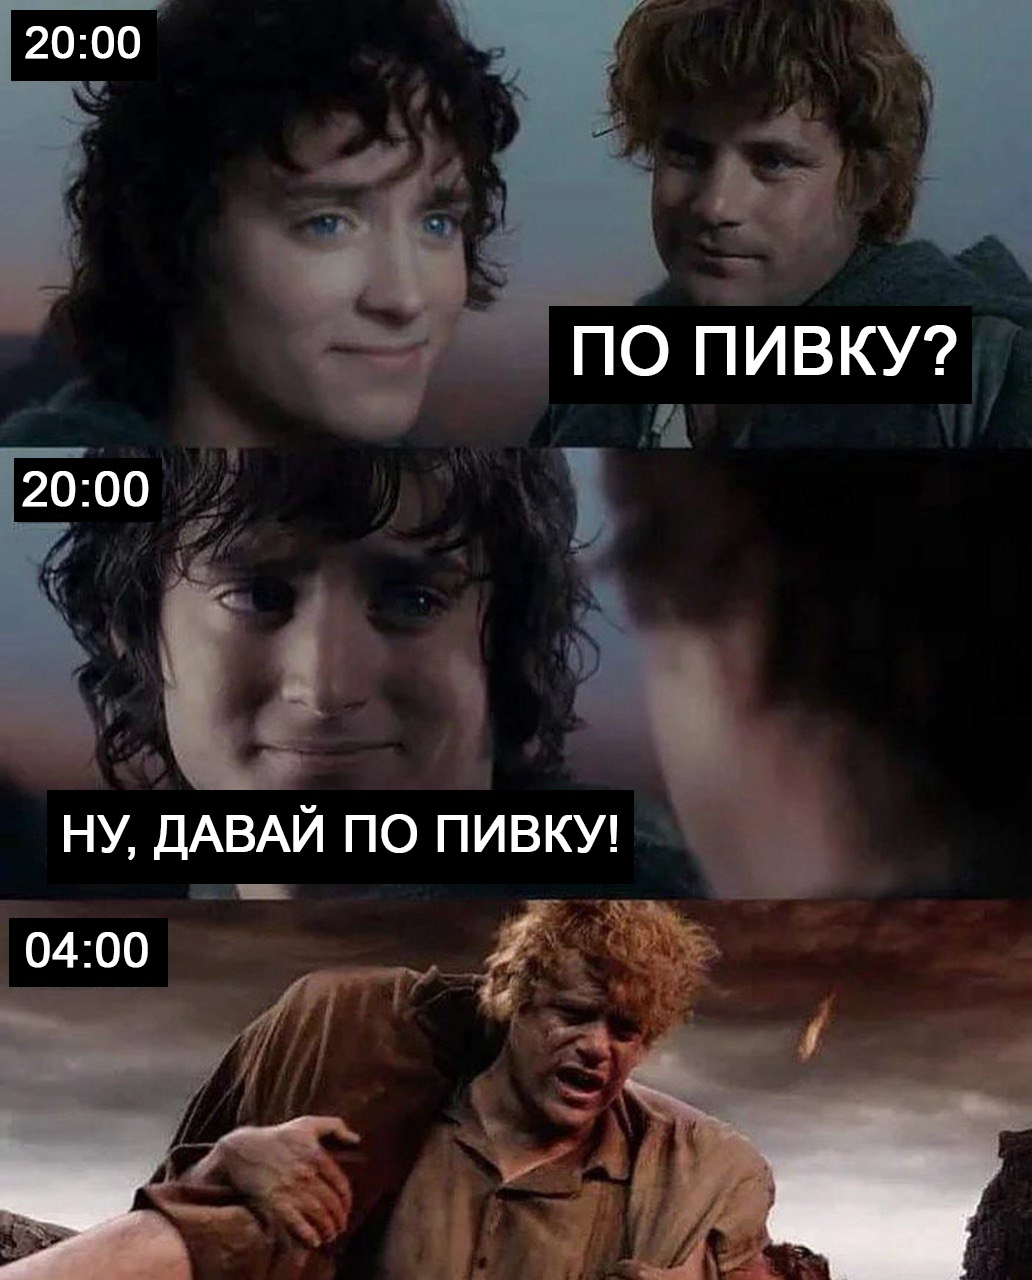 Ну можно по другому. Хоббиты Фродо и Сэм. Мем. По одной Фродо. Фродо прикол.